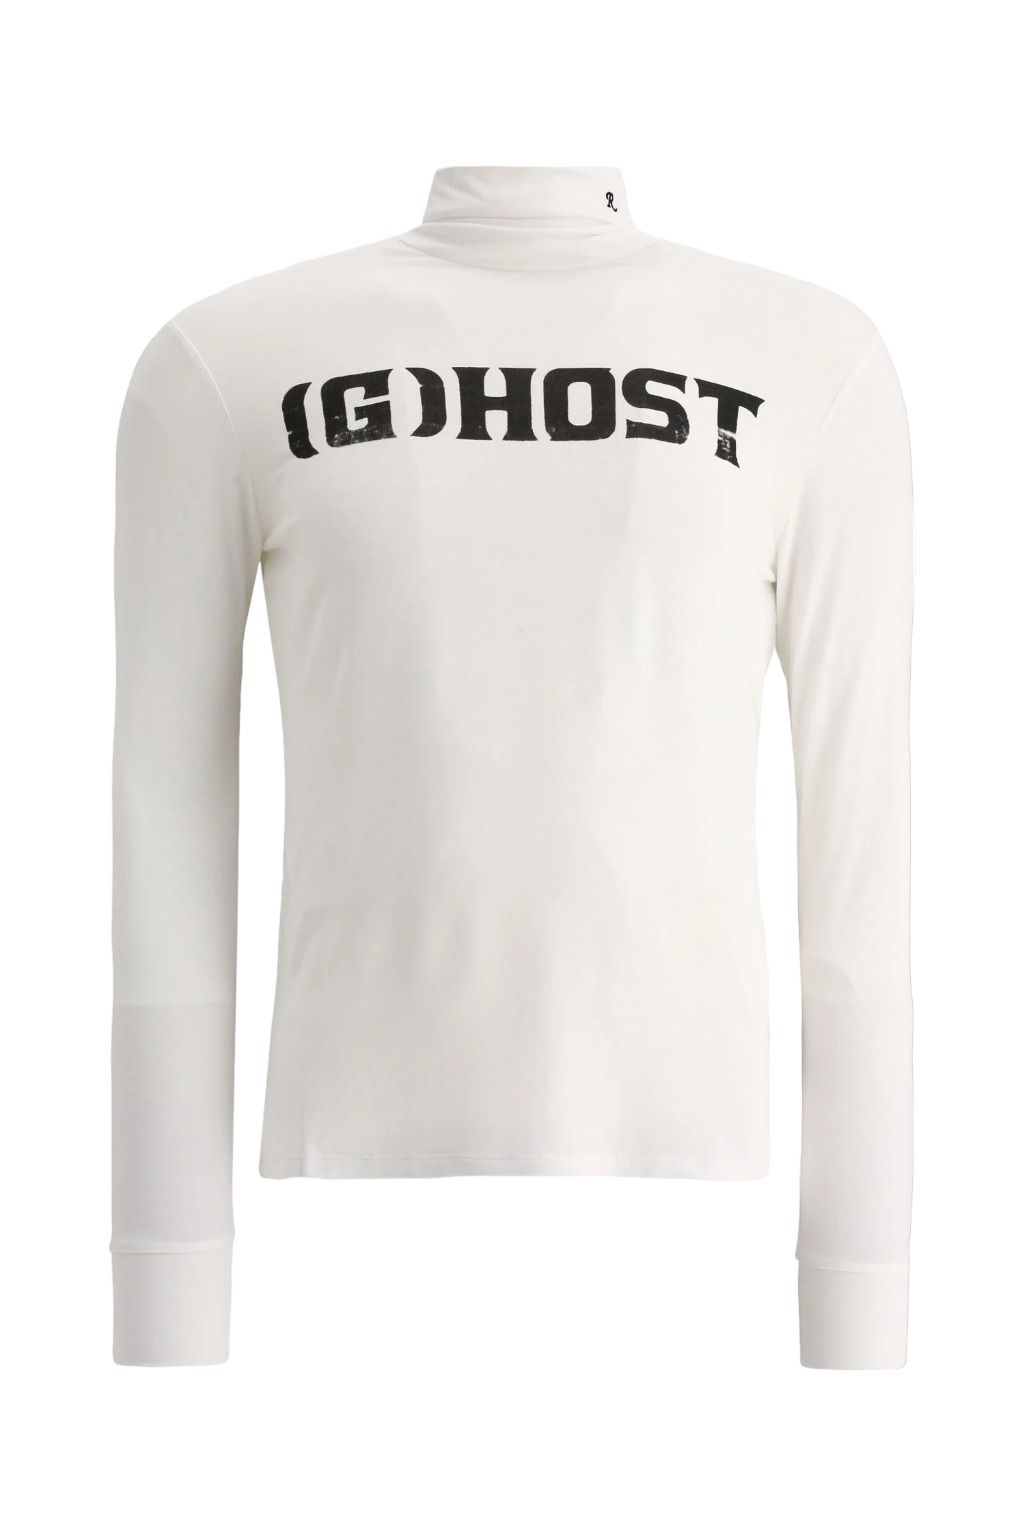 Raf Simons Raf Simons 'Ghost' Turtleneck Sweater White | Grailed